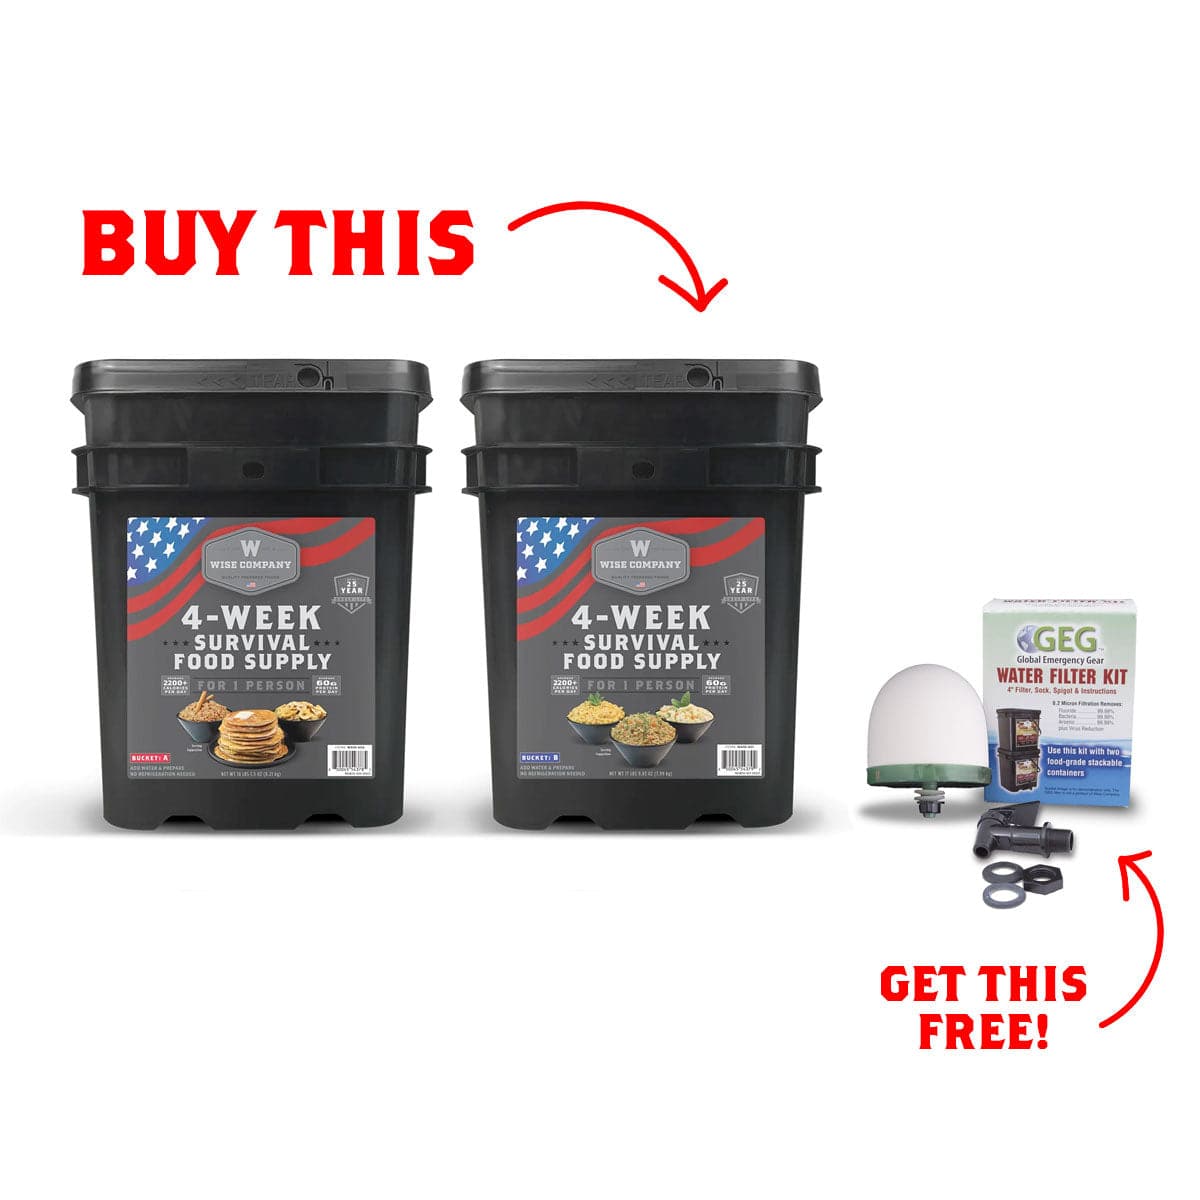 Buy a 4 Week Food Supply, get a Free Water Filter Kit